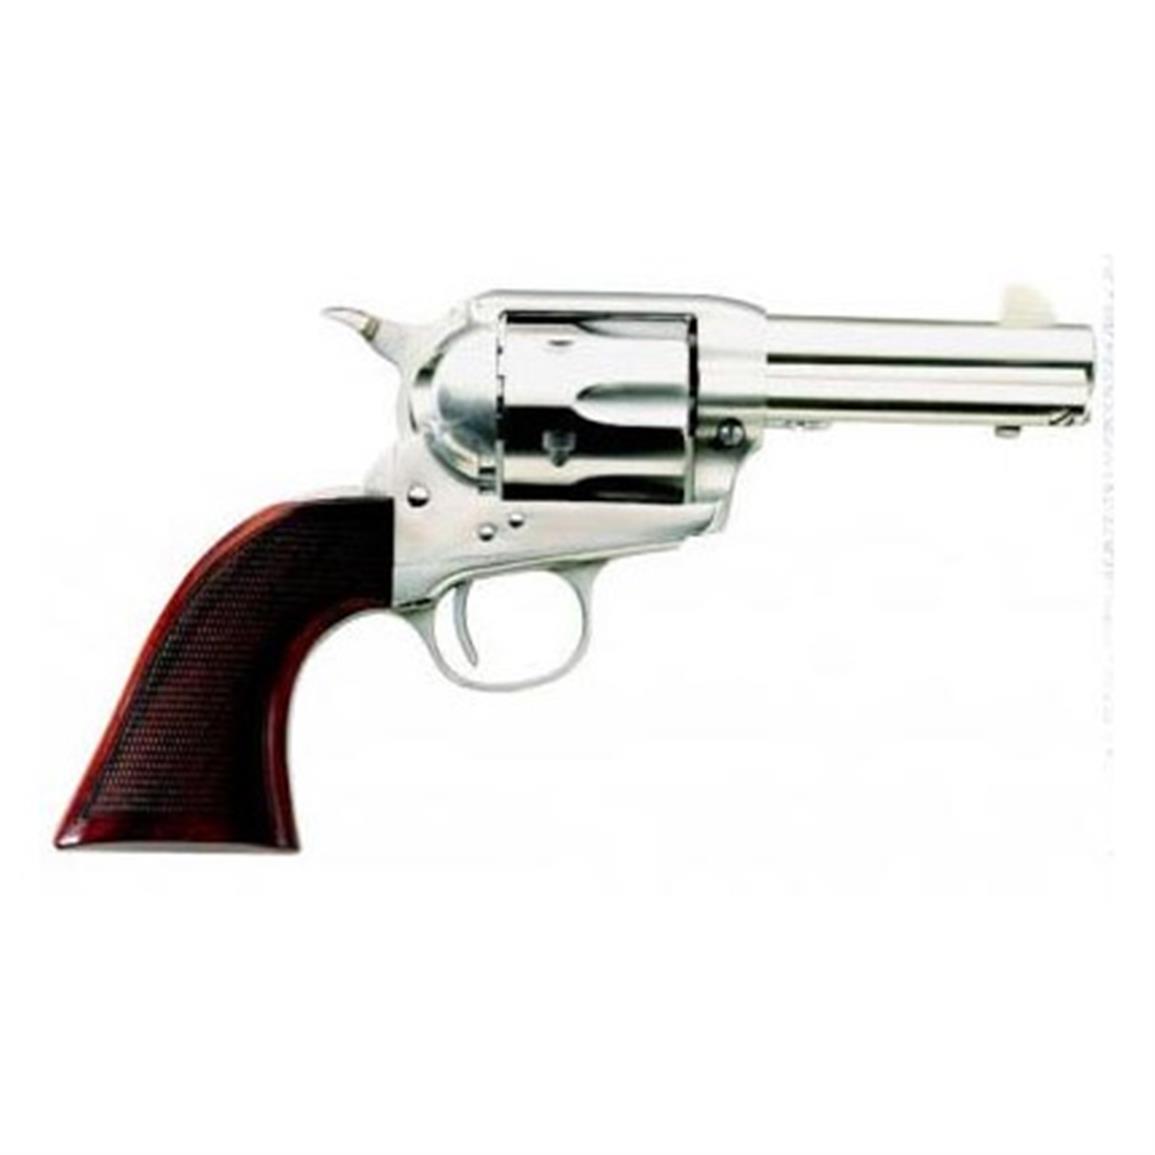 Taylor's & Co. Uberti The Ranch Hand Deluxe, Revolver, .45 Colt, 451DE, 839665000007, 5.5 inch Barrel